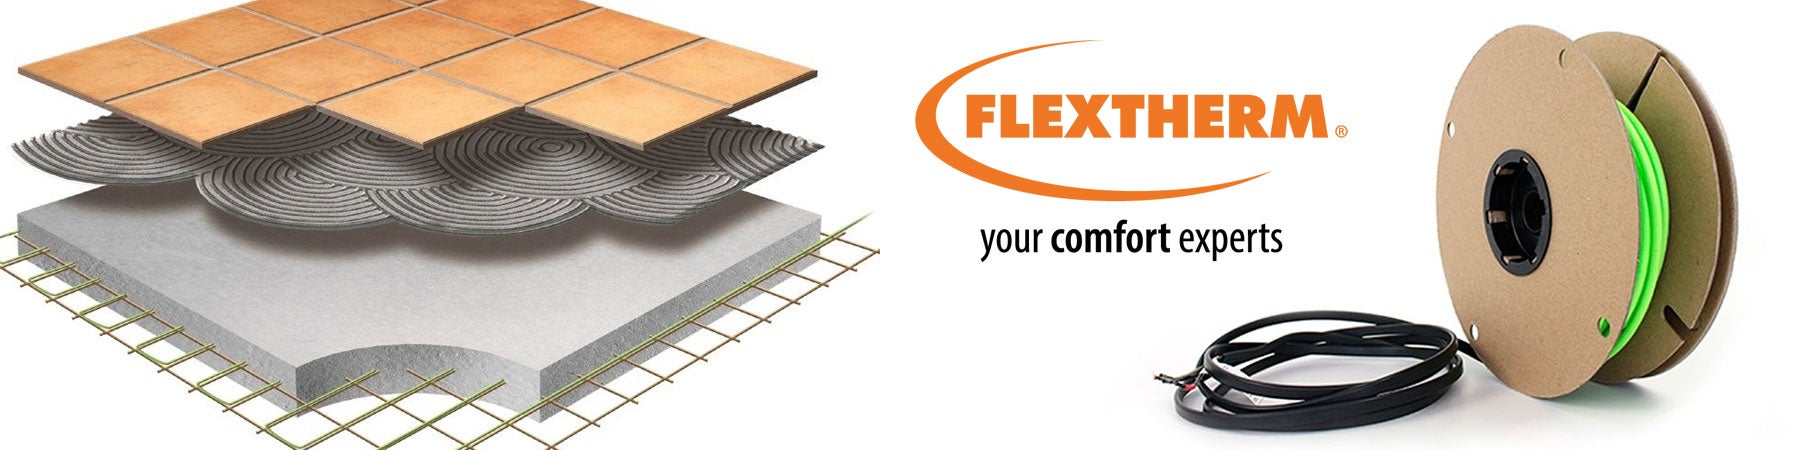 Flextherm – Green Cable Concrete. Your comfort experts